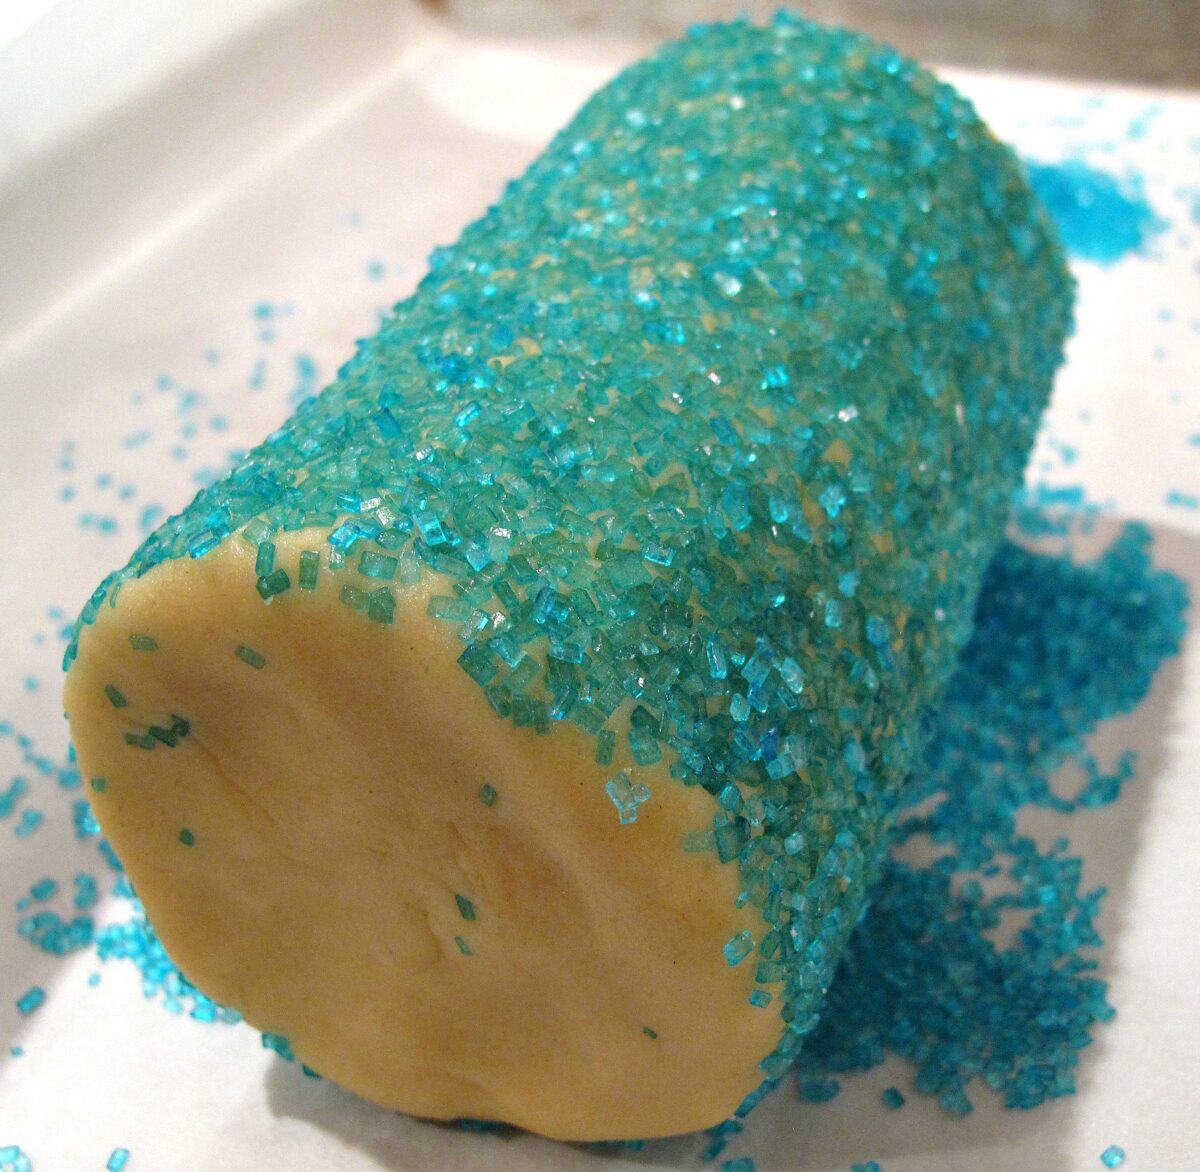 Log of sugar cookie dough coated in blue decorating sugar.